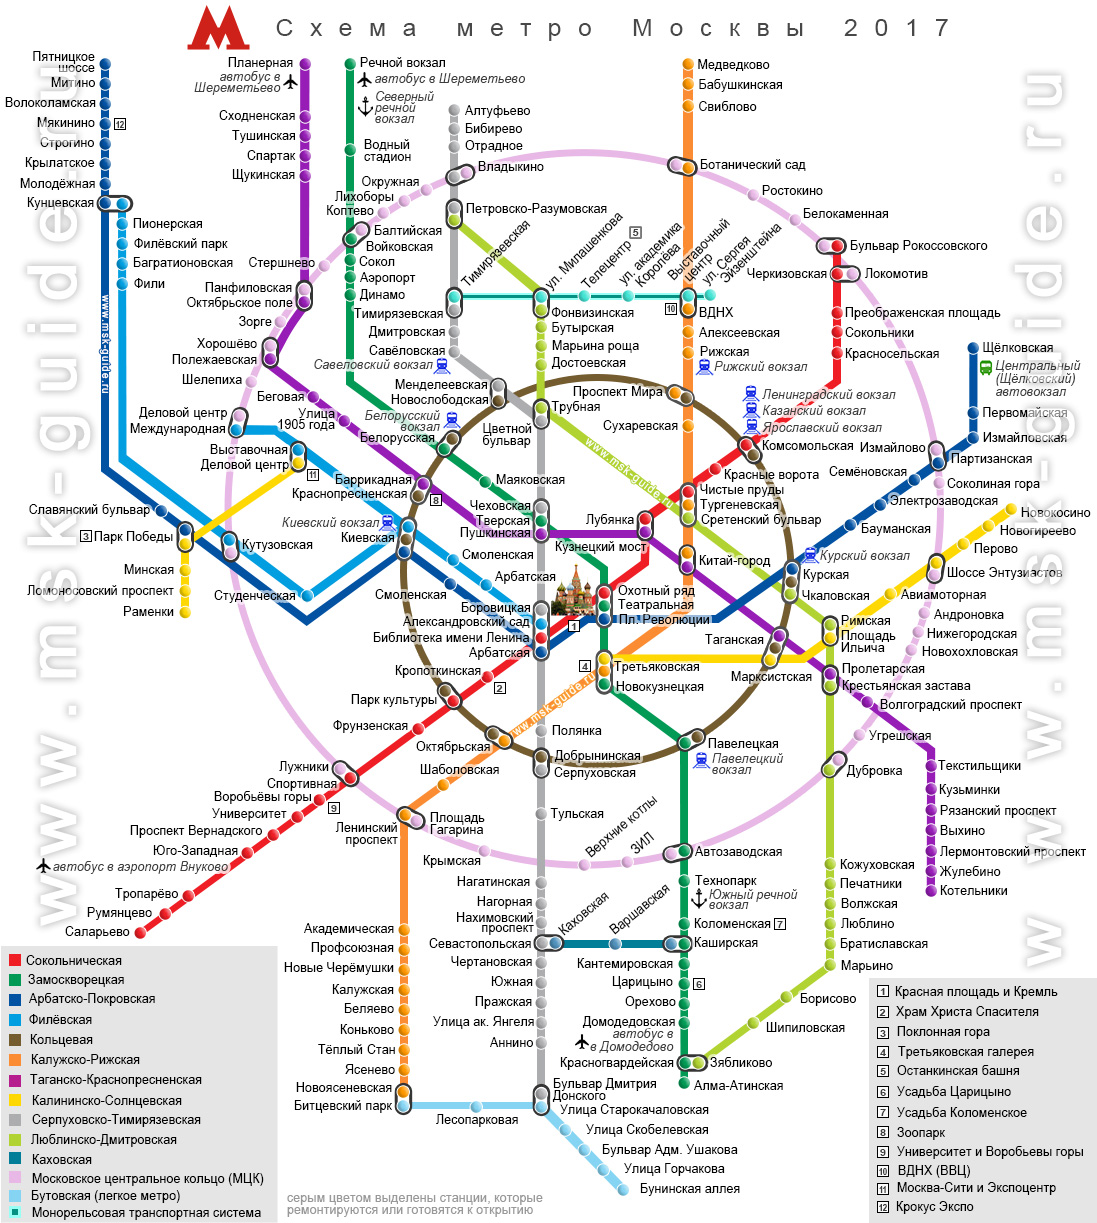 Картинки с днем метрополитена москвы